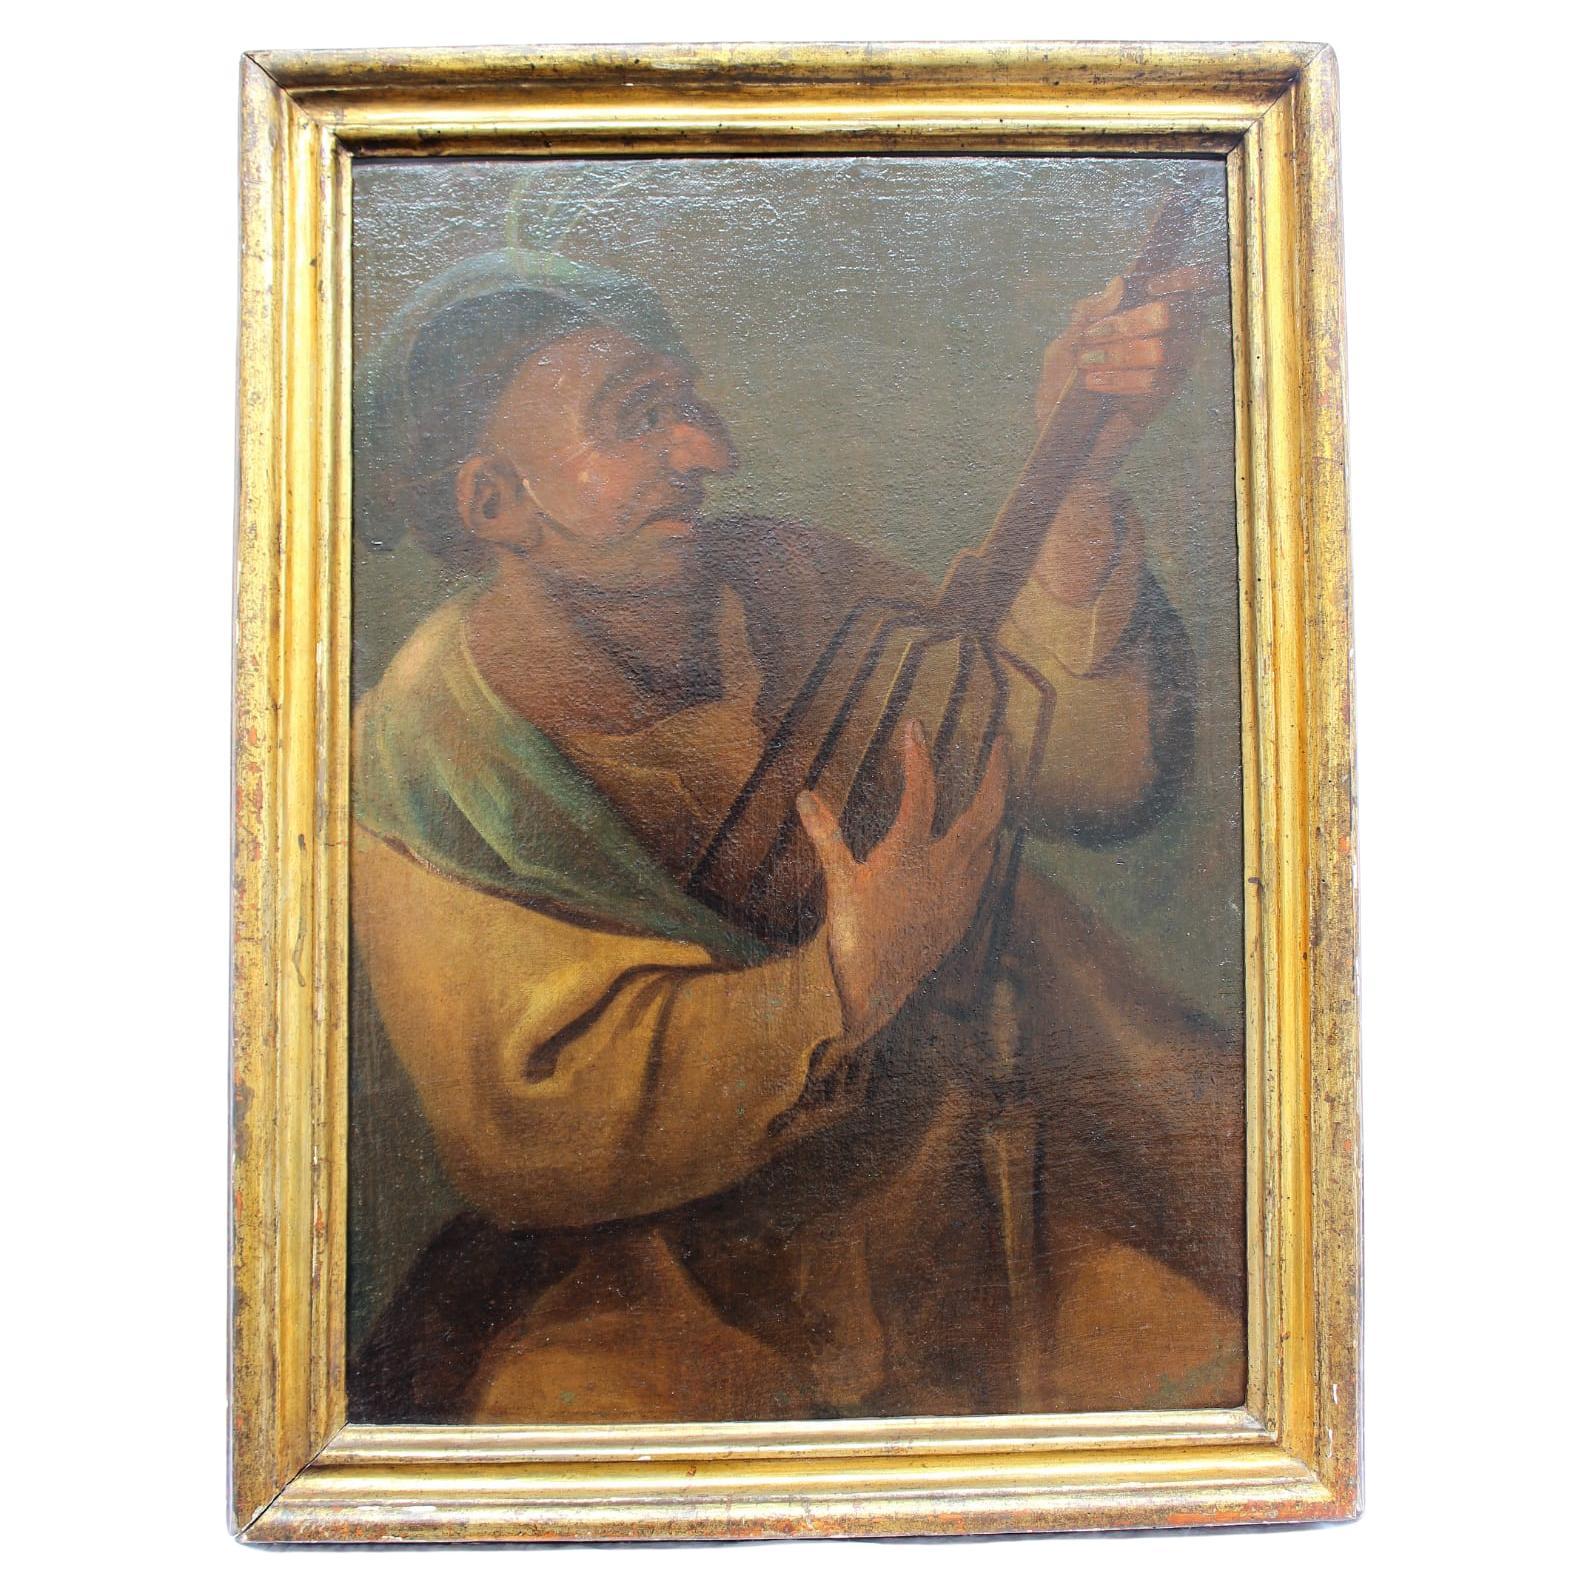 Italian School 17th Century Oil Painting The Musician